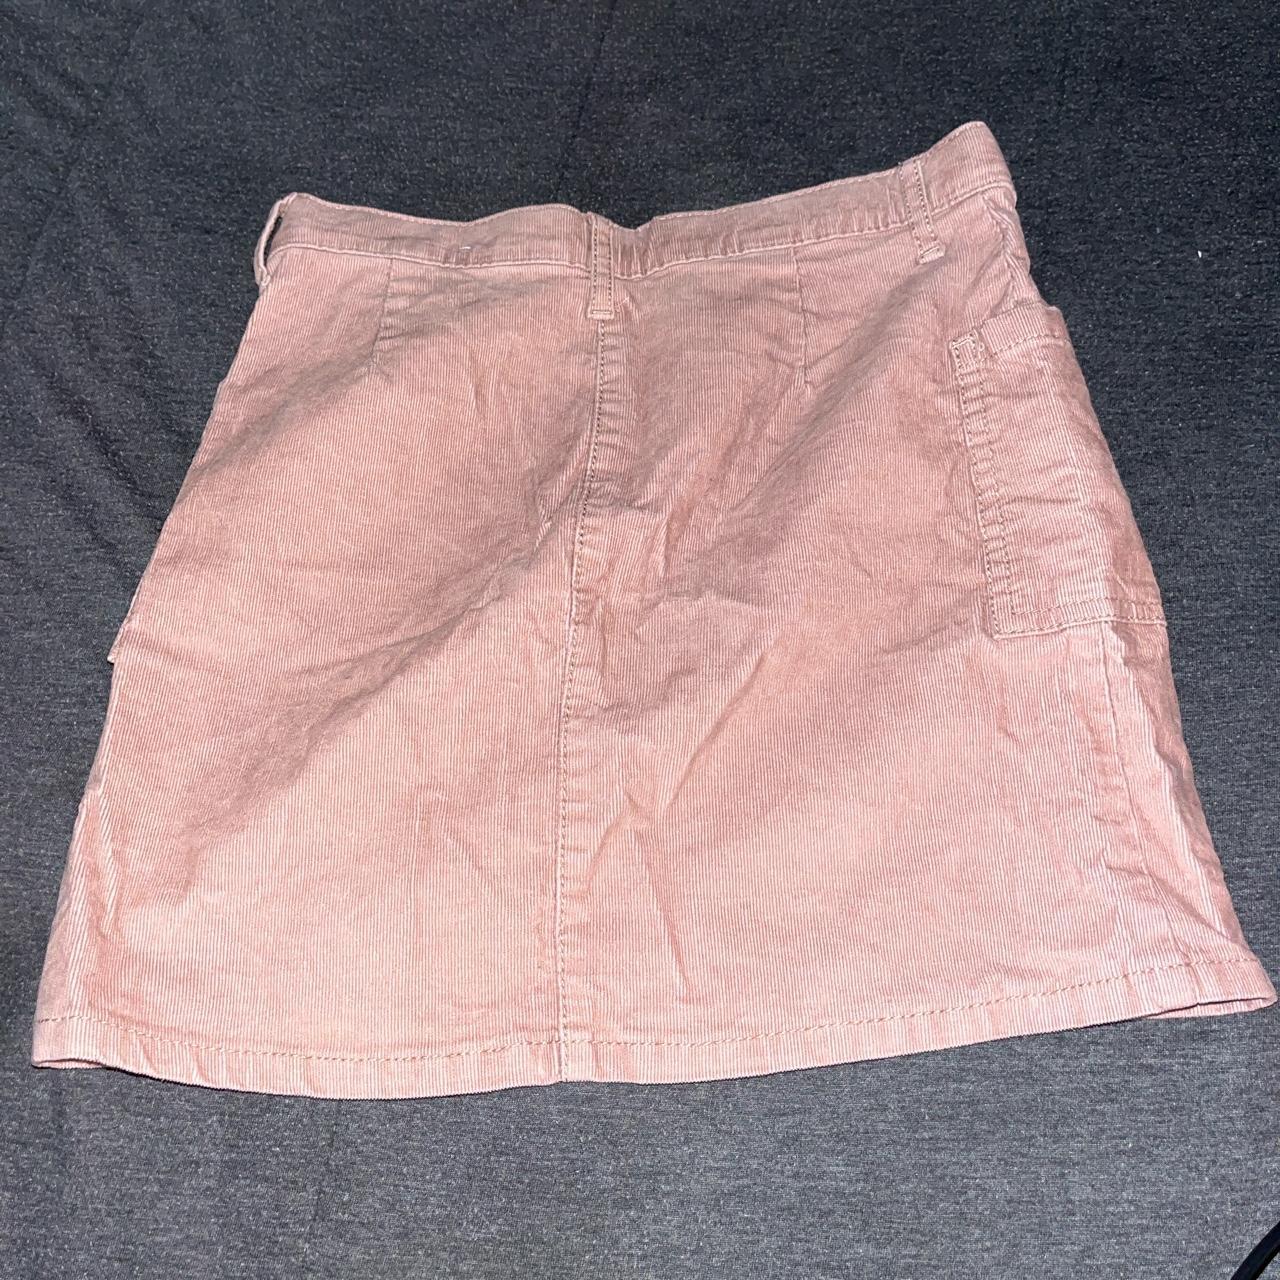 Product Image 2 - Light pink mini skirt
Good for